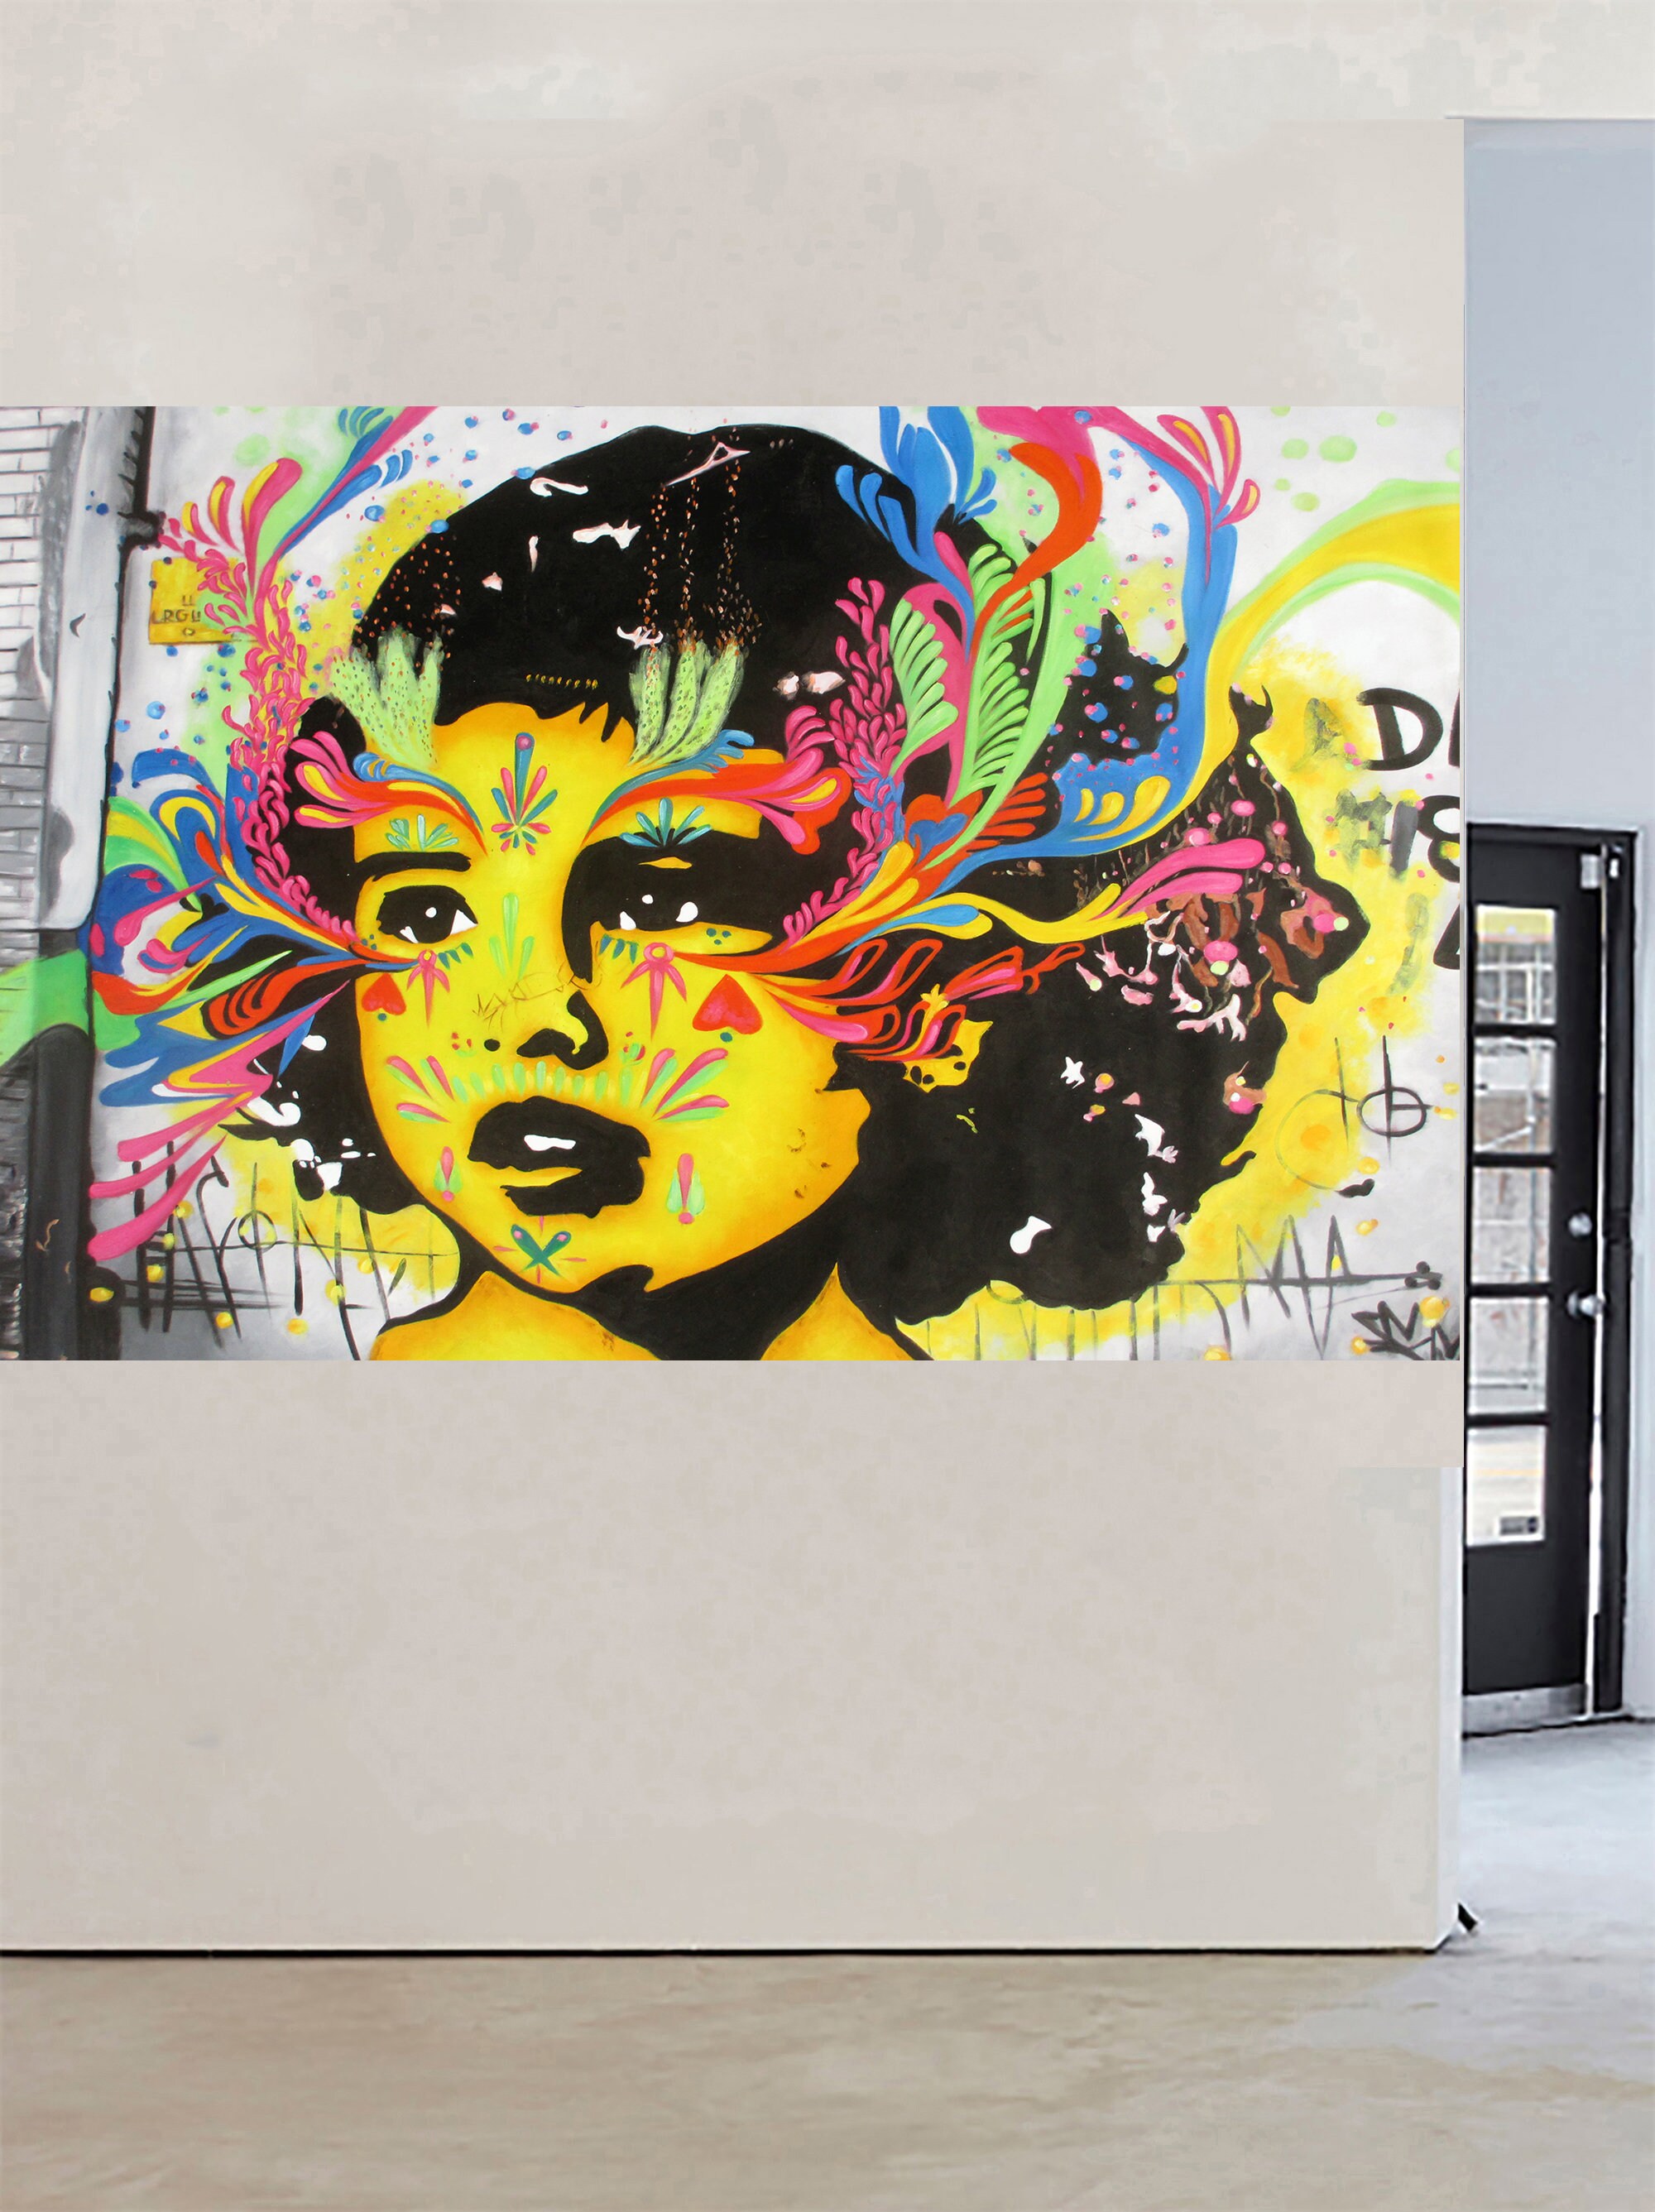 180cm x 90cm Urban princess Street art canvas face girl abstract painting 